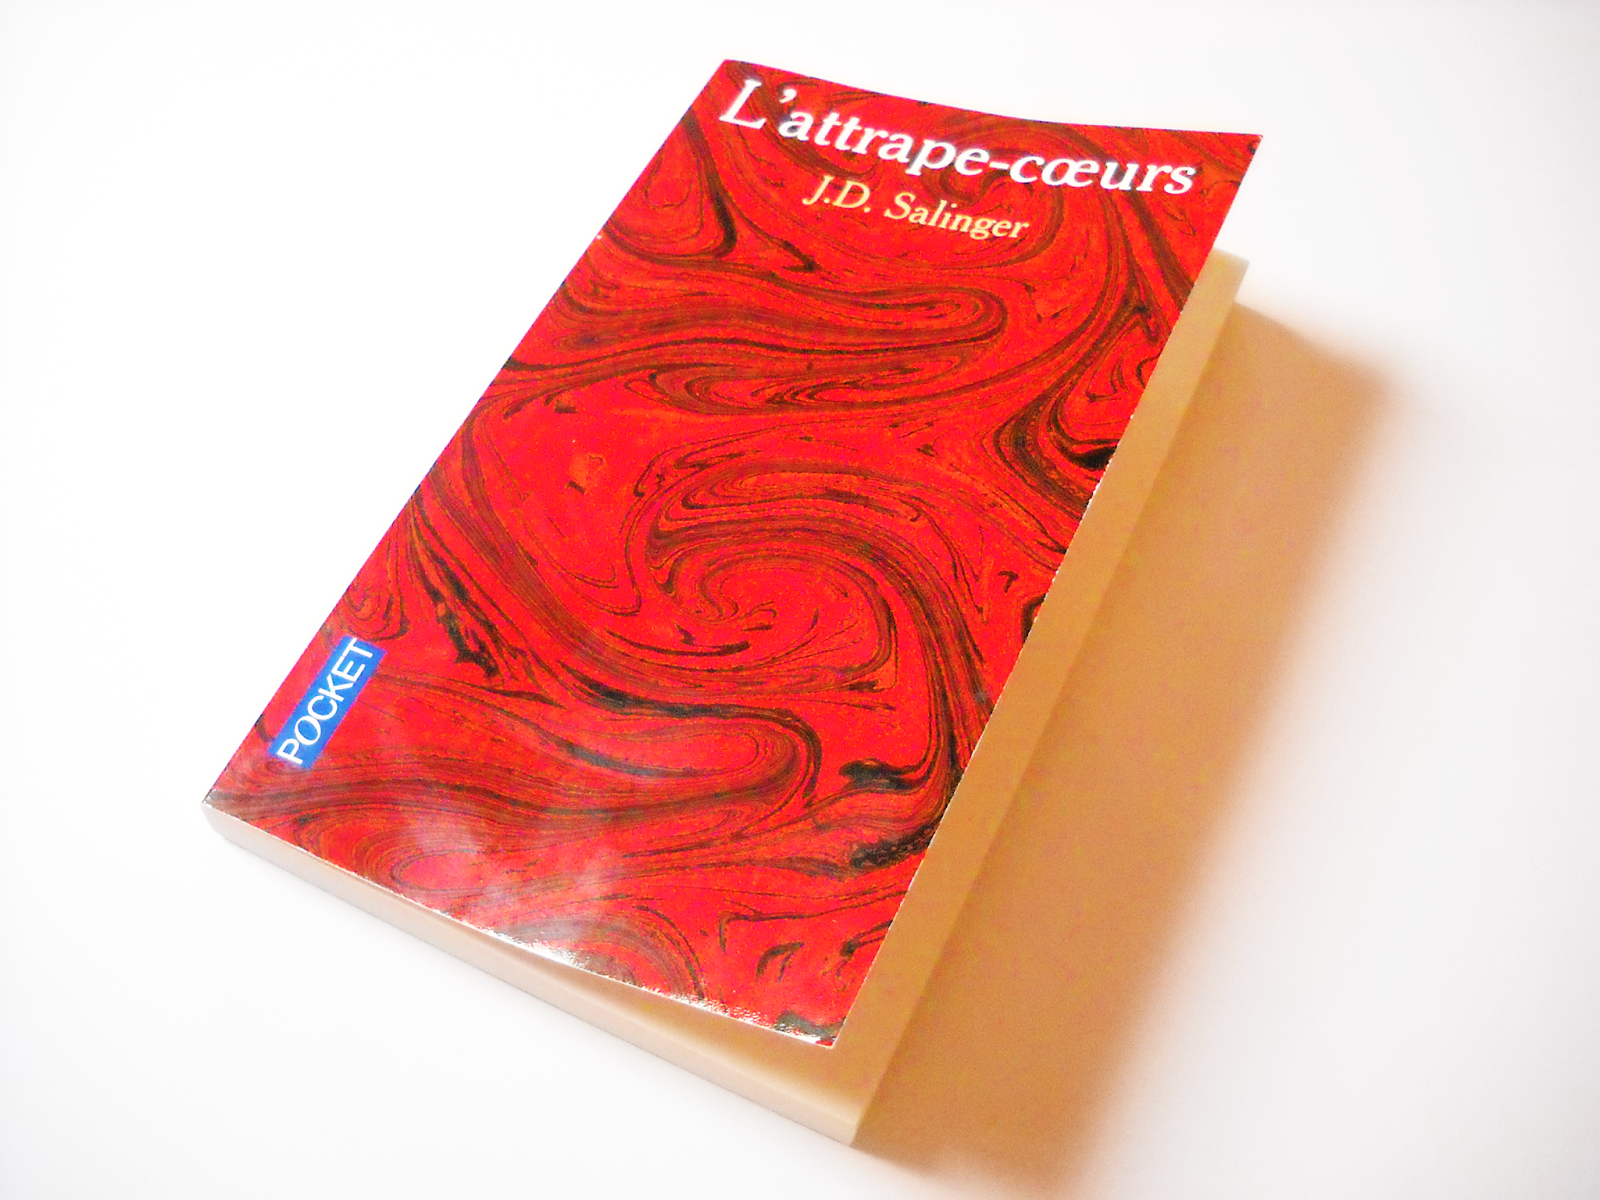 L'Attrape-Coeurs [J. D. Salinger]